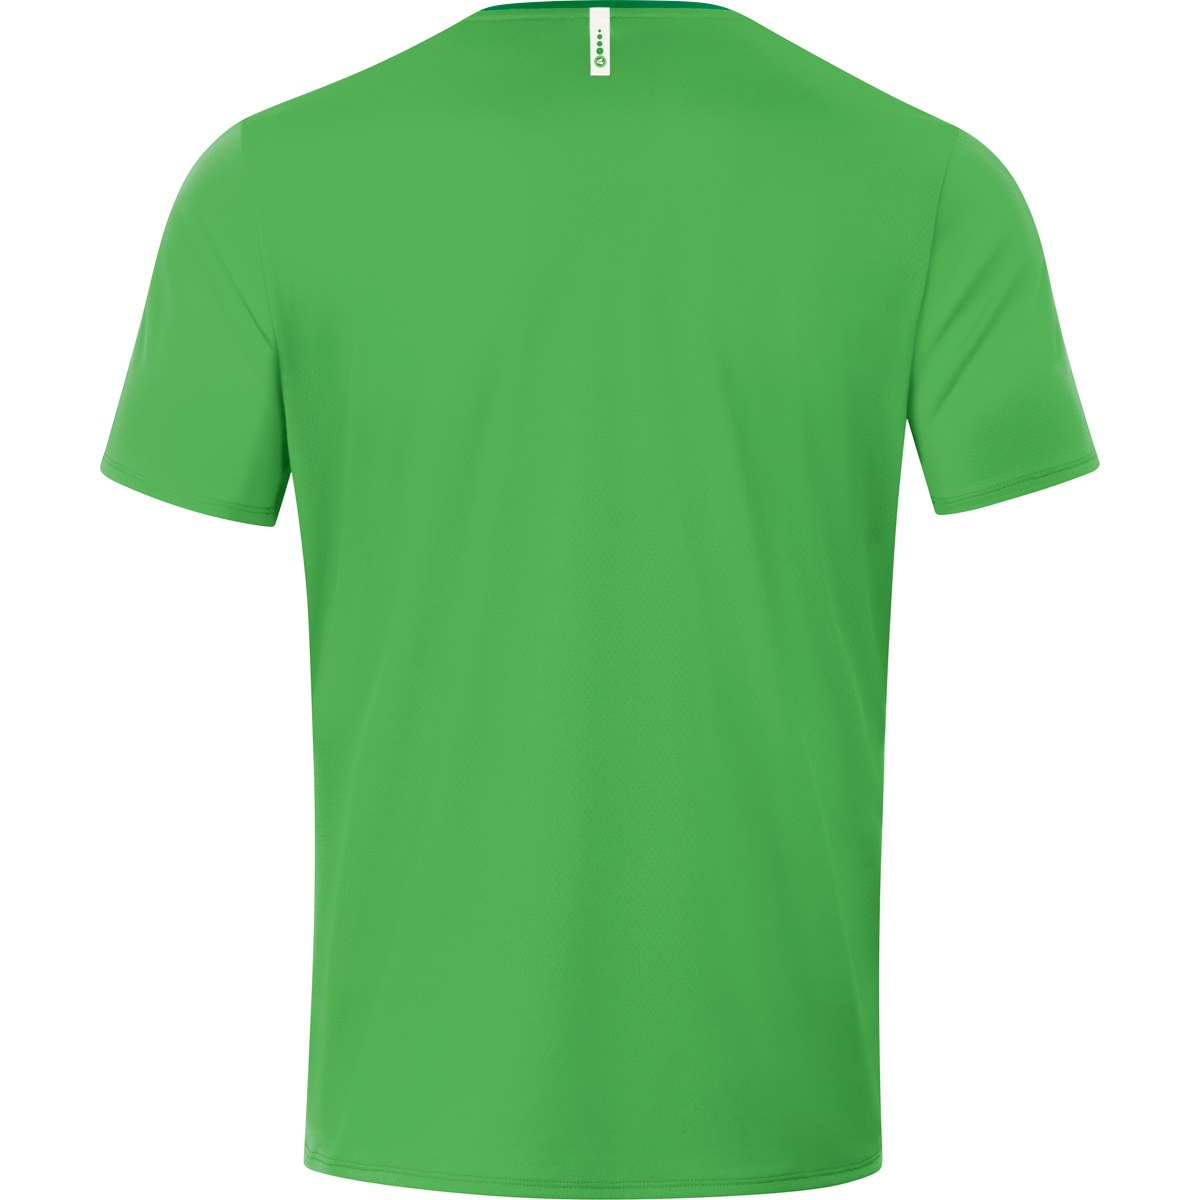 Kinder, Gr. T-Shirt 2.0 116, green/sportgrün, JAKO soft Champ 6120